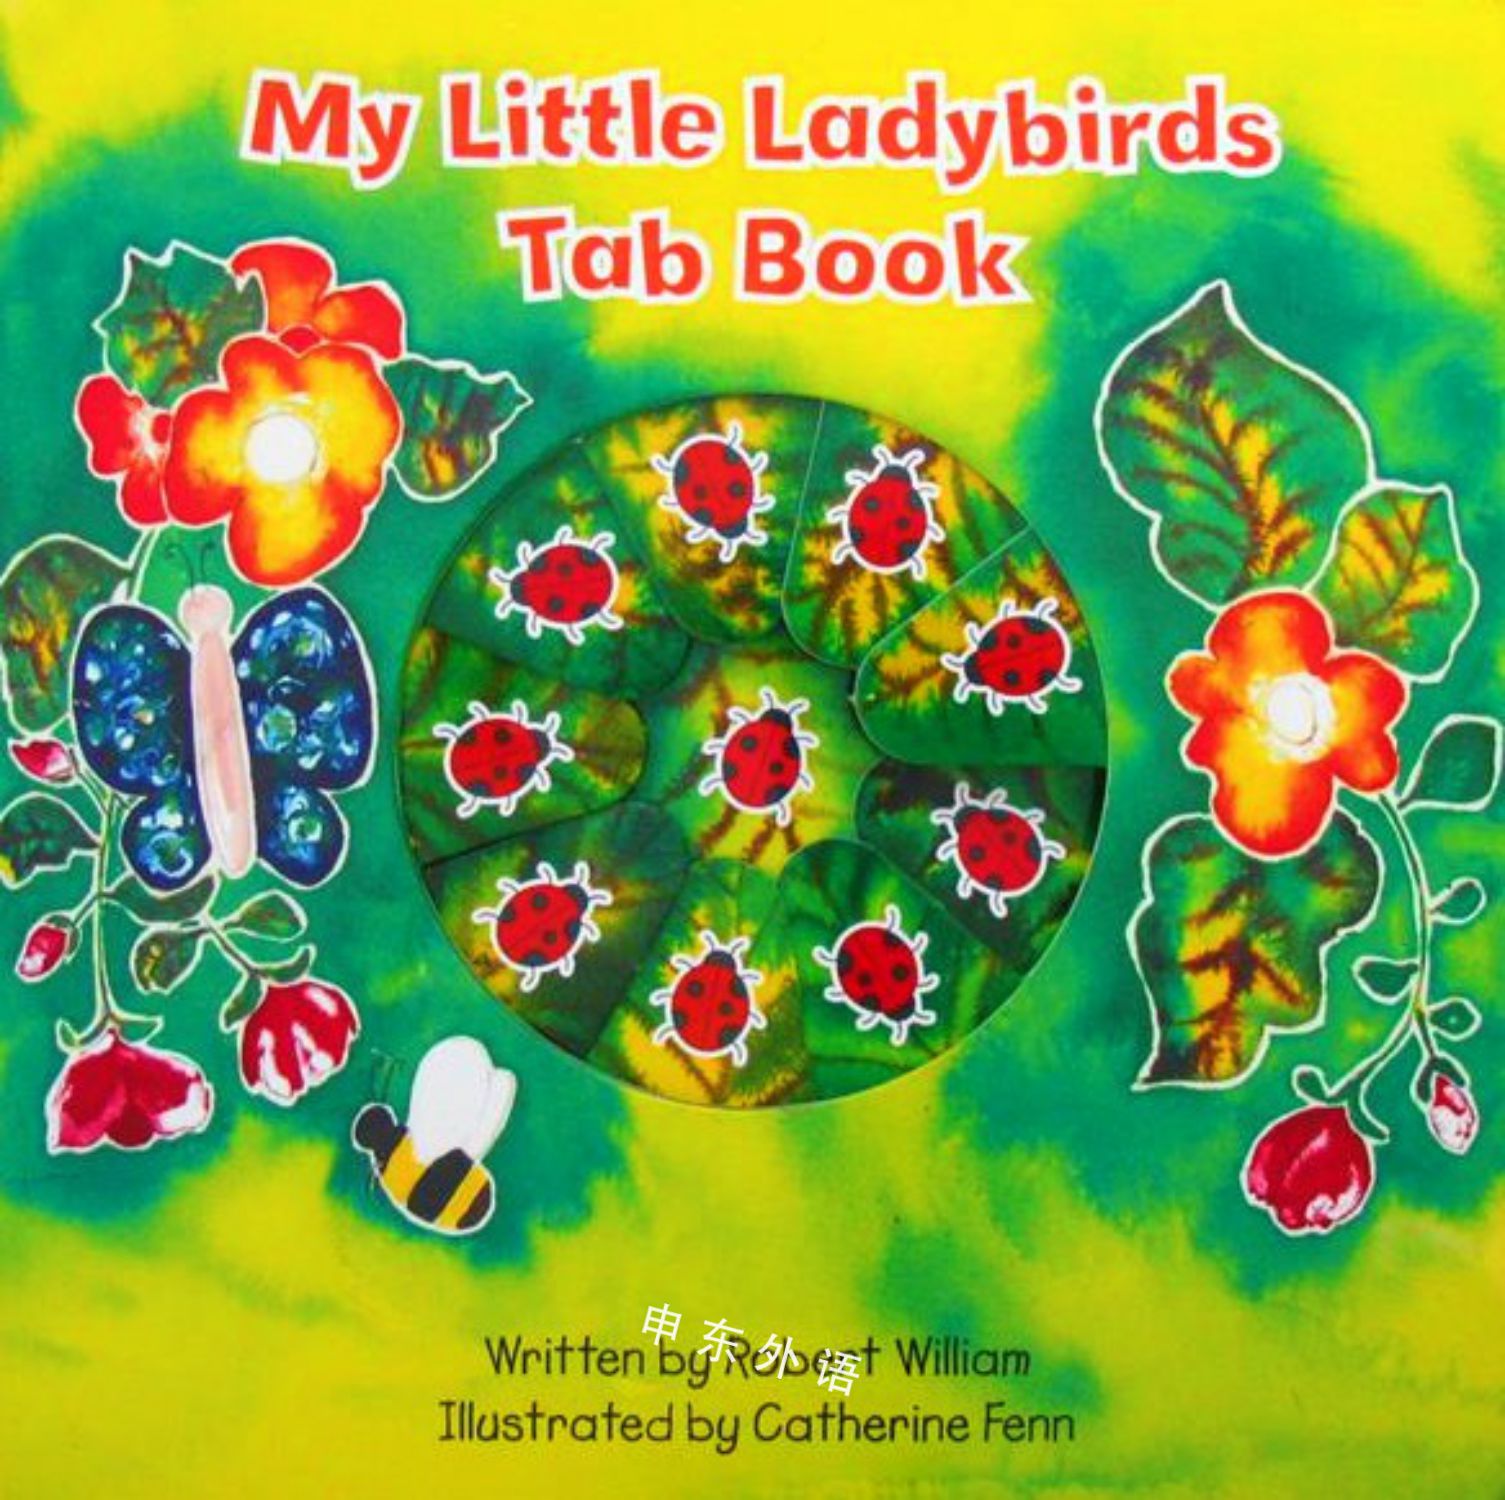 IMG : My Little Ladybirds